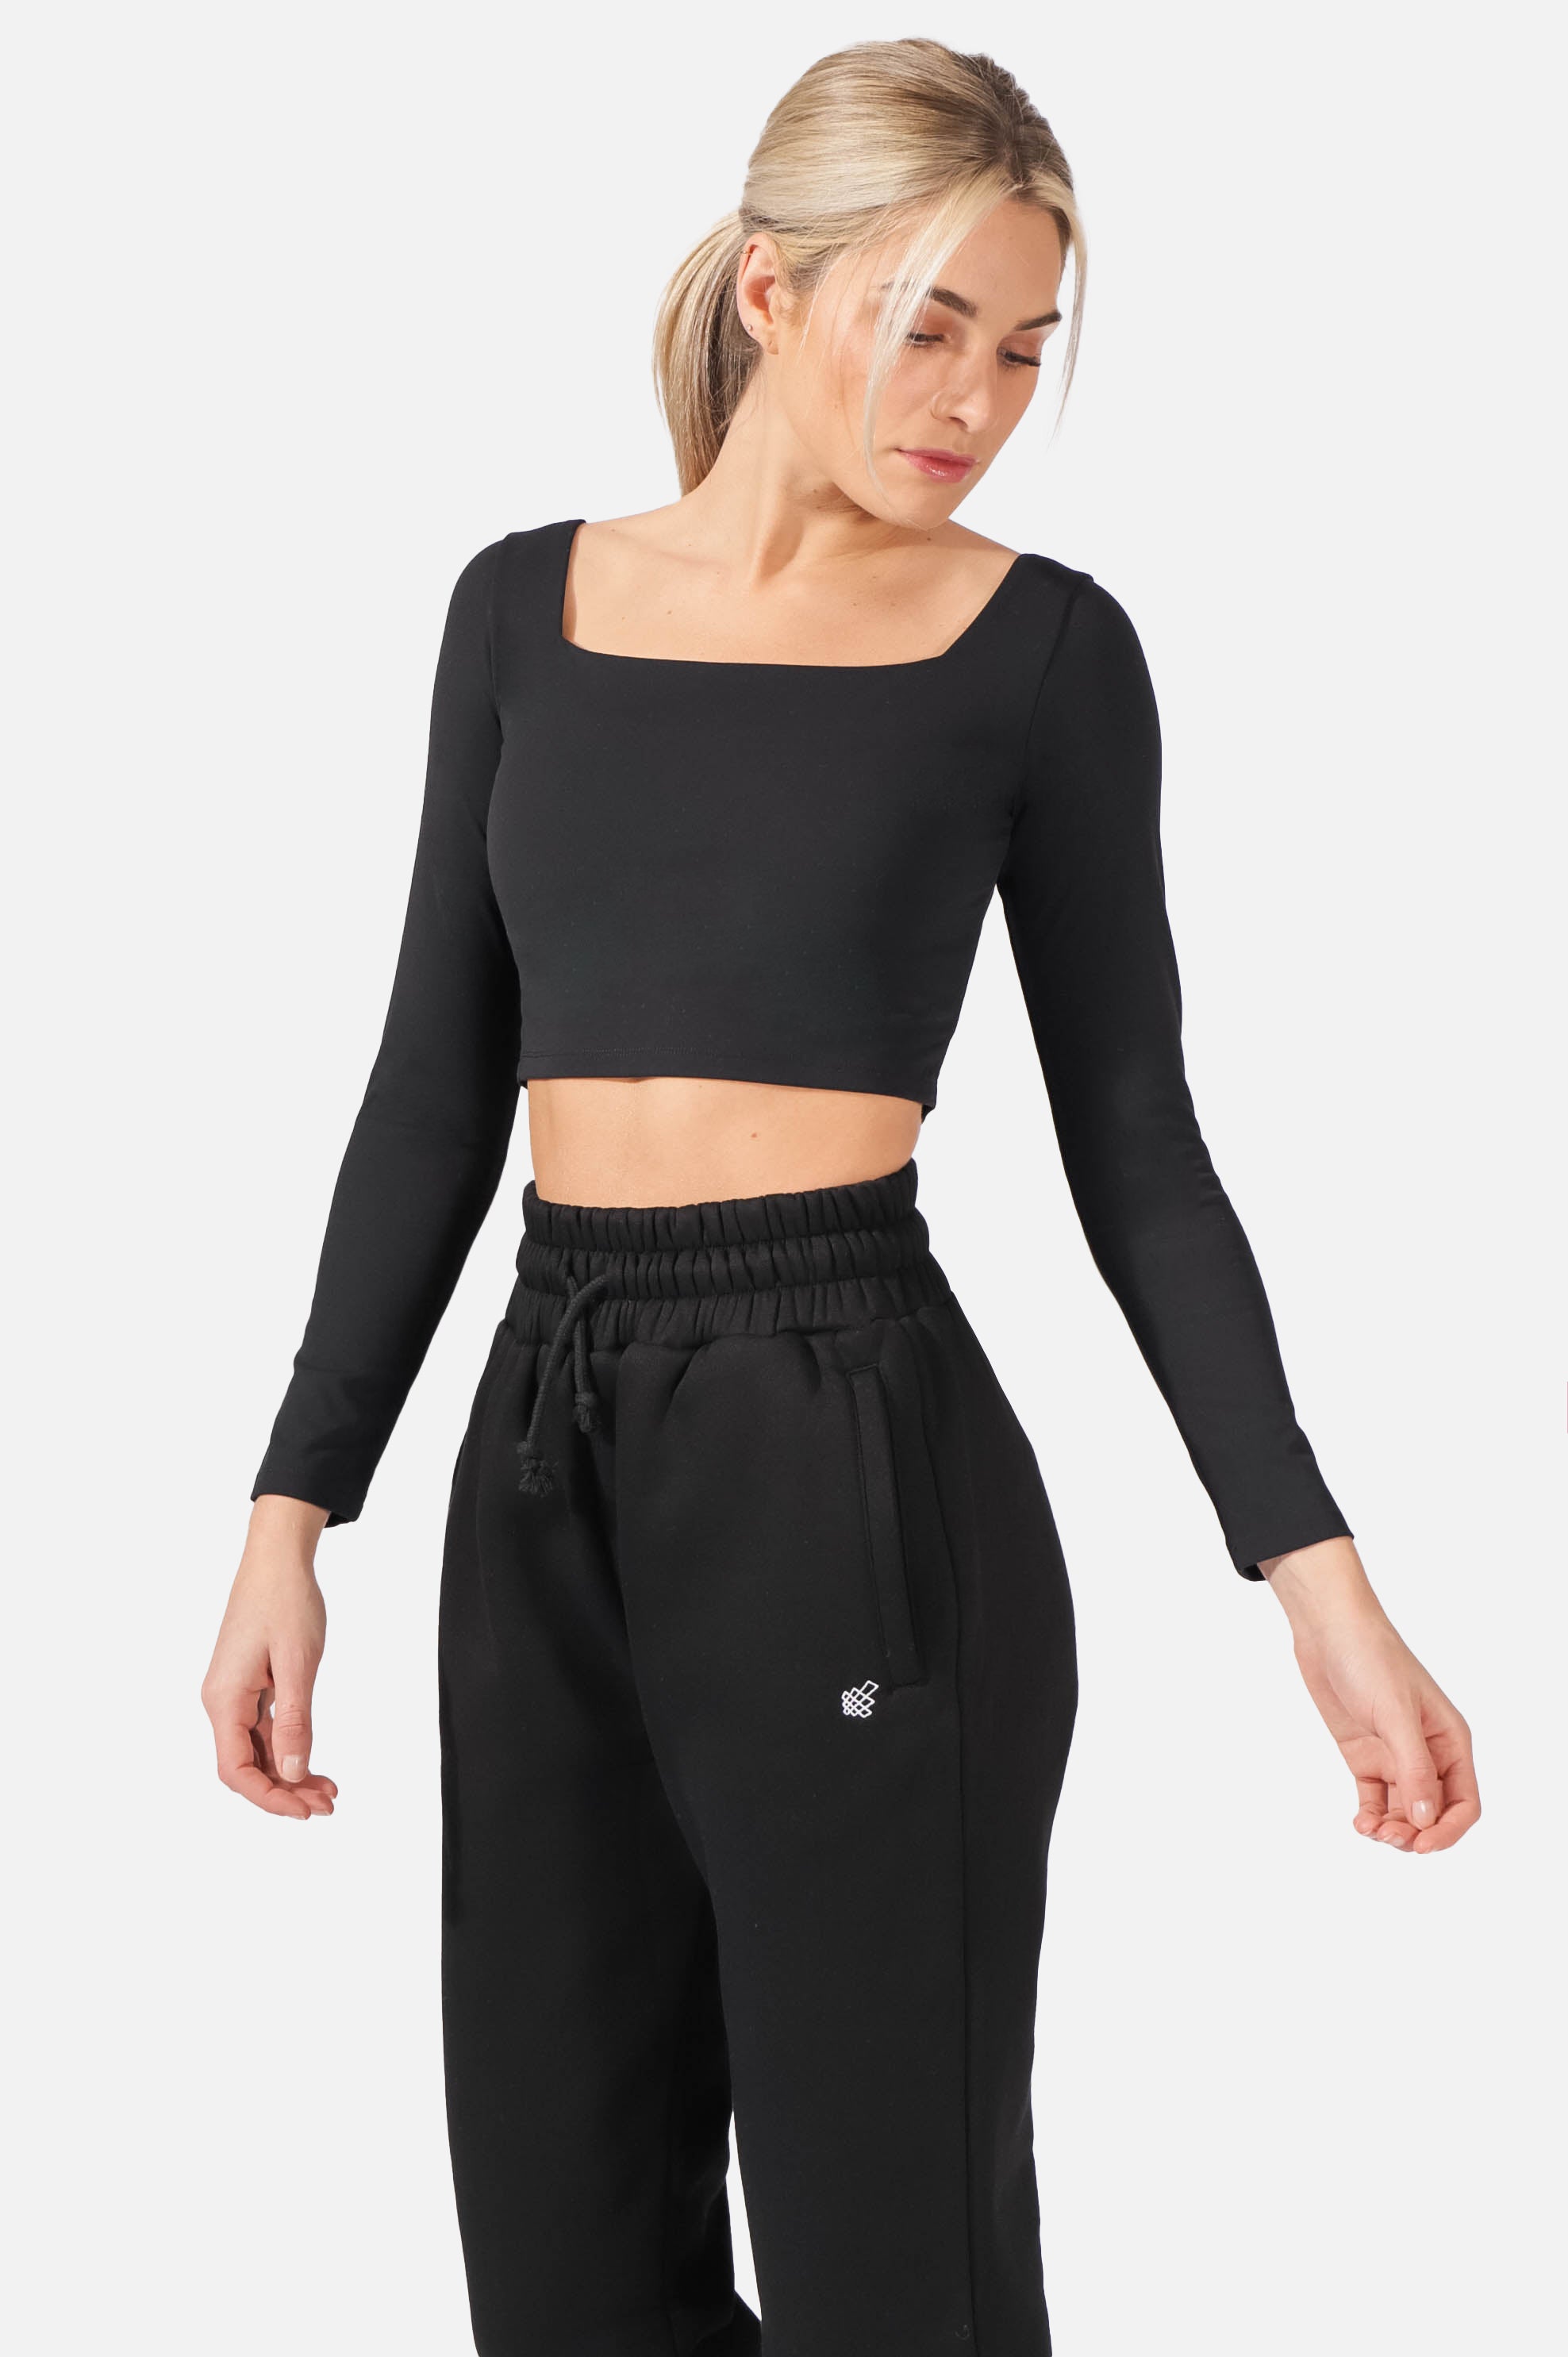 Nova Sport Yoga Crop Top Women's Size M Black Criss-Cross Long Sleeve  Activewear